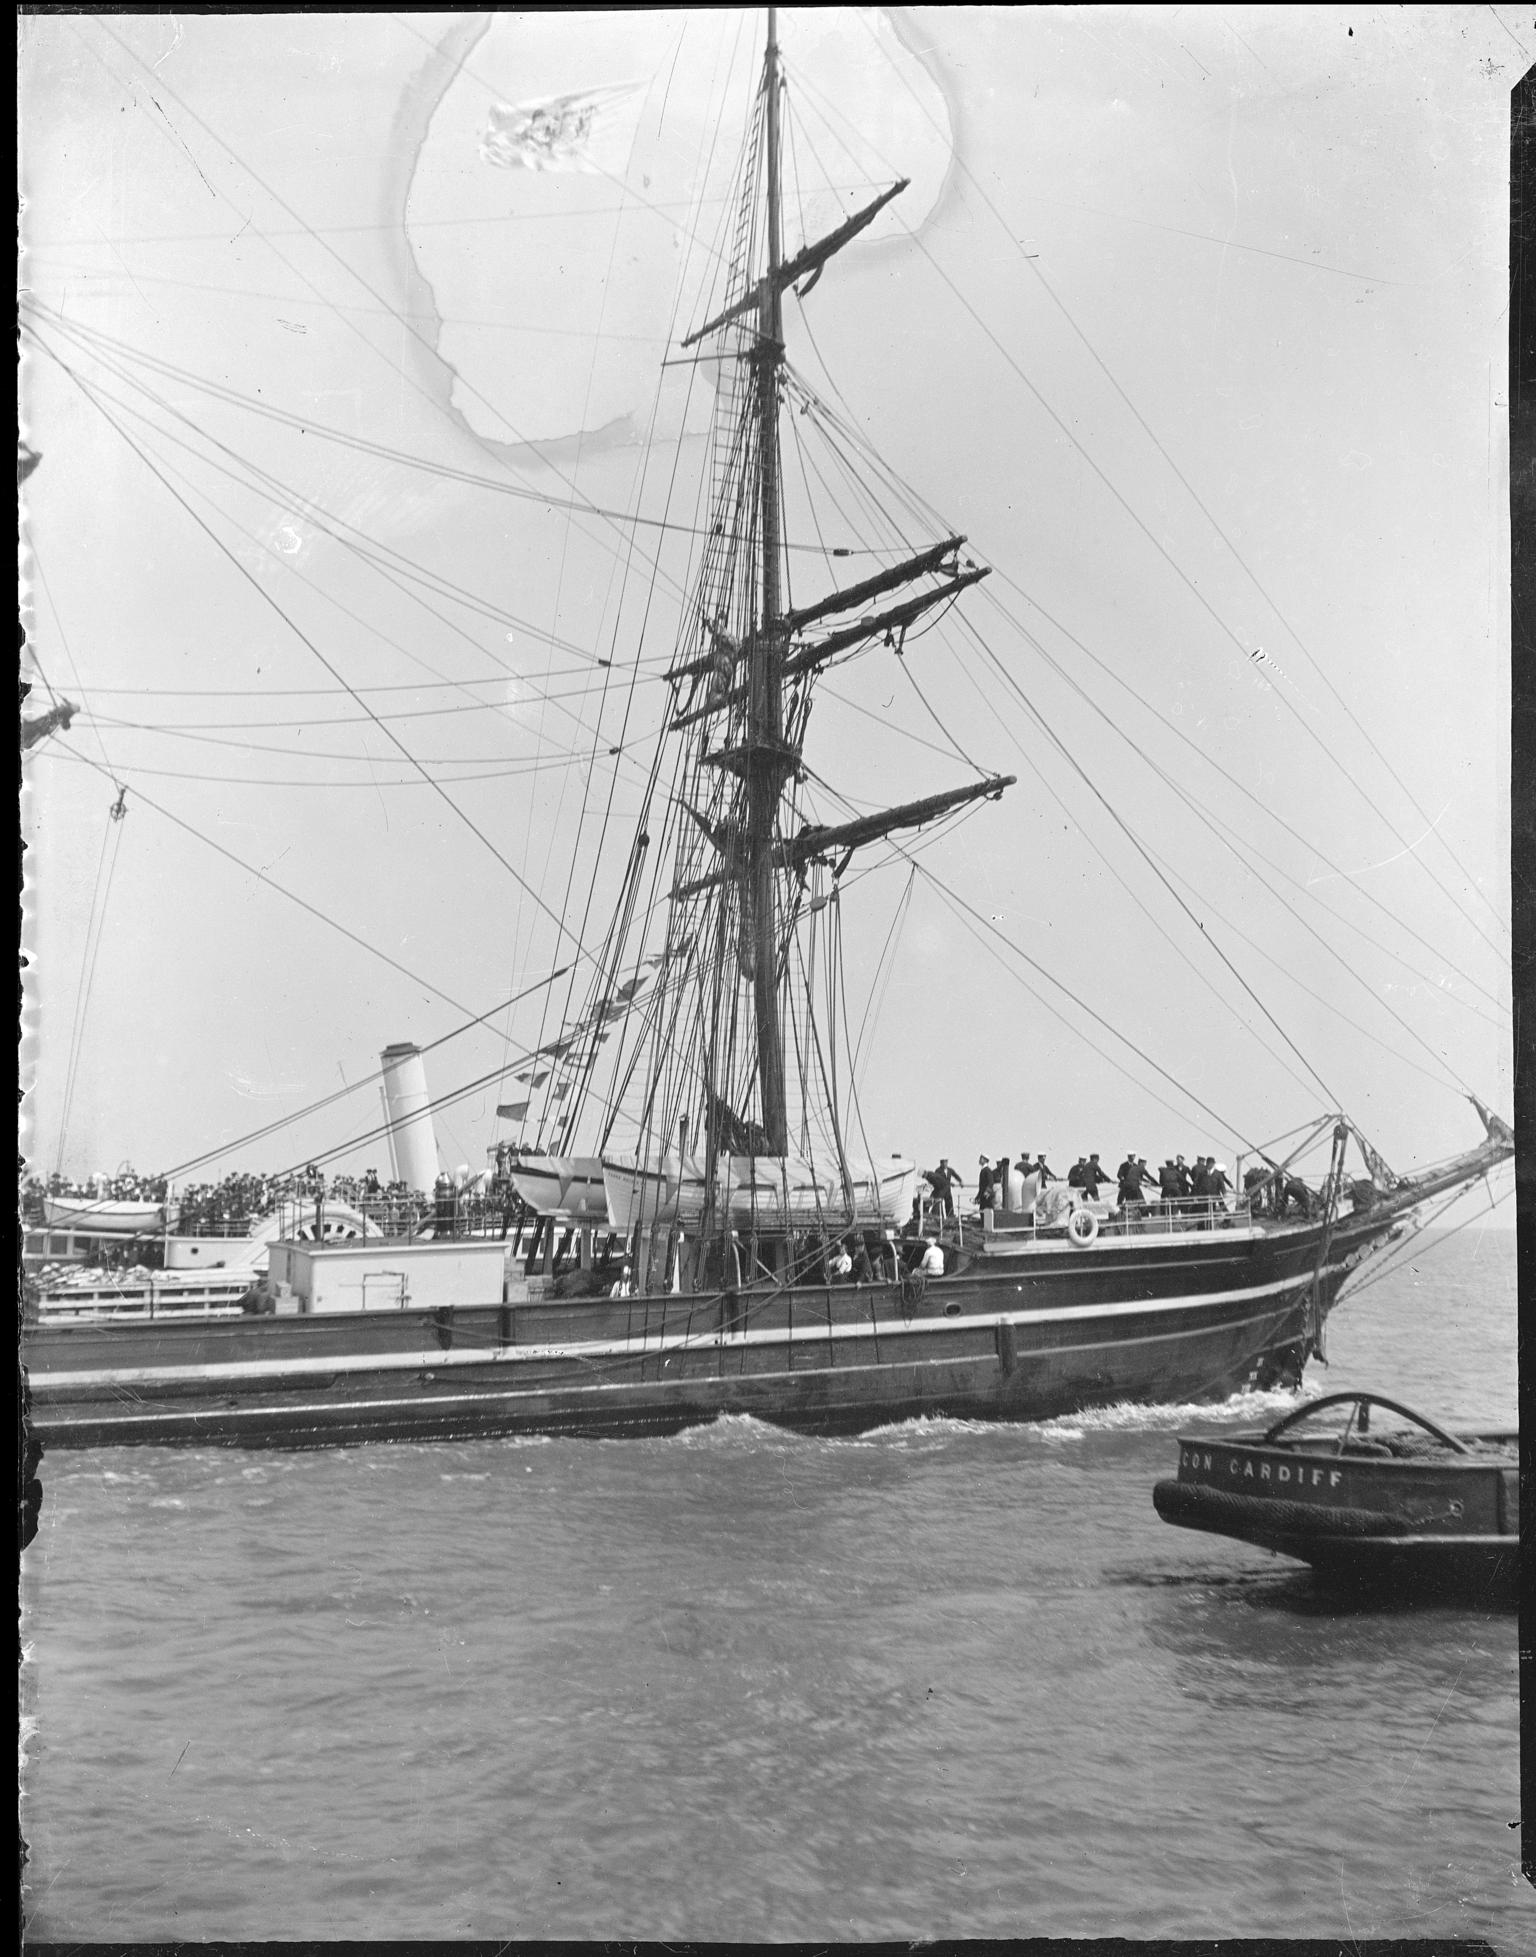 TERRA NOVA leaving Cardiff, 1910, glass negative